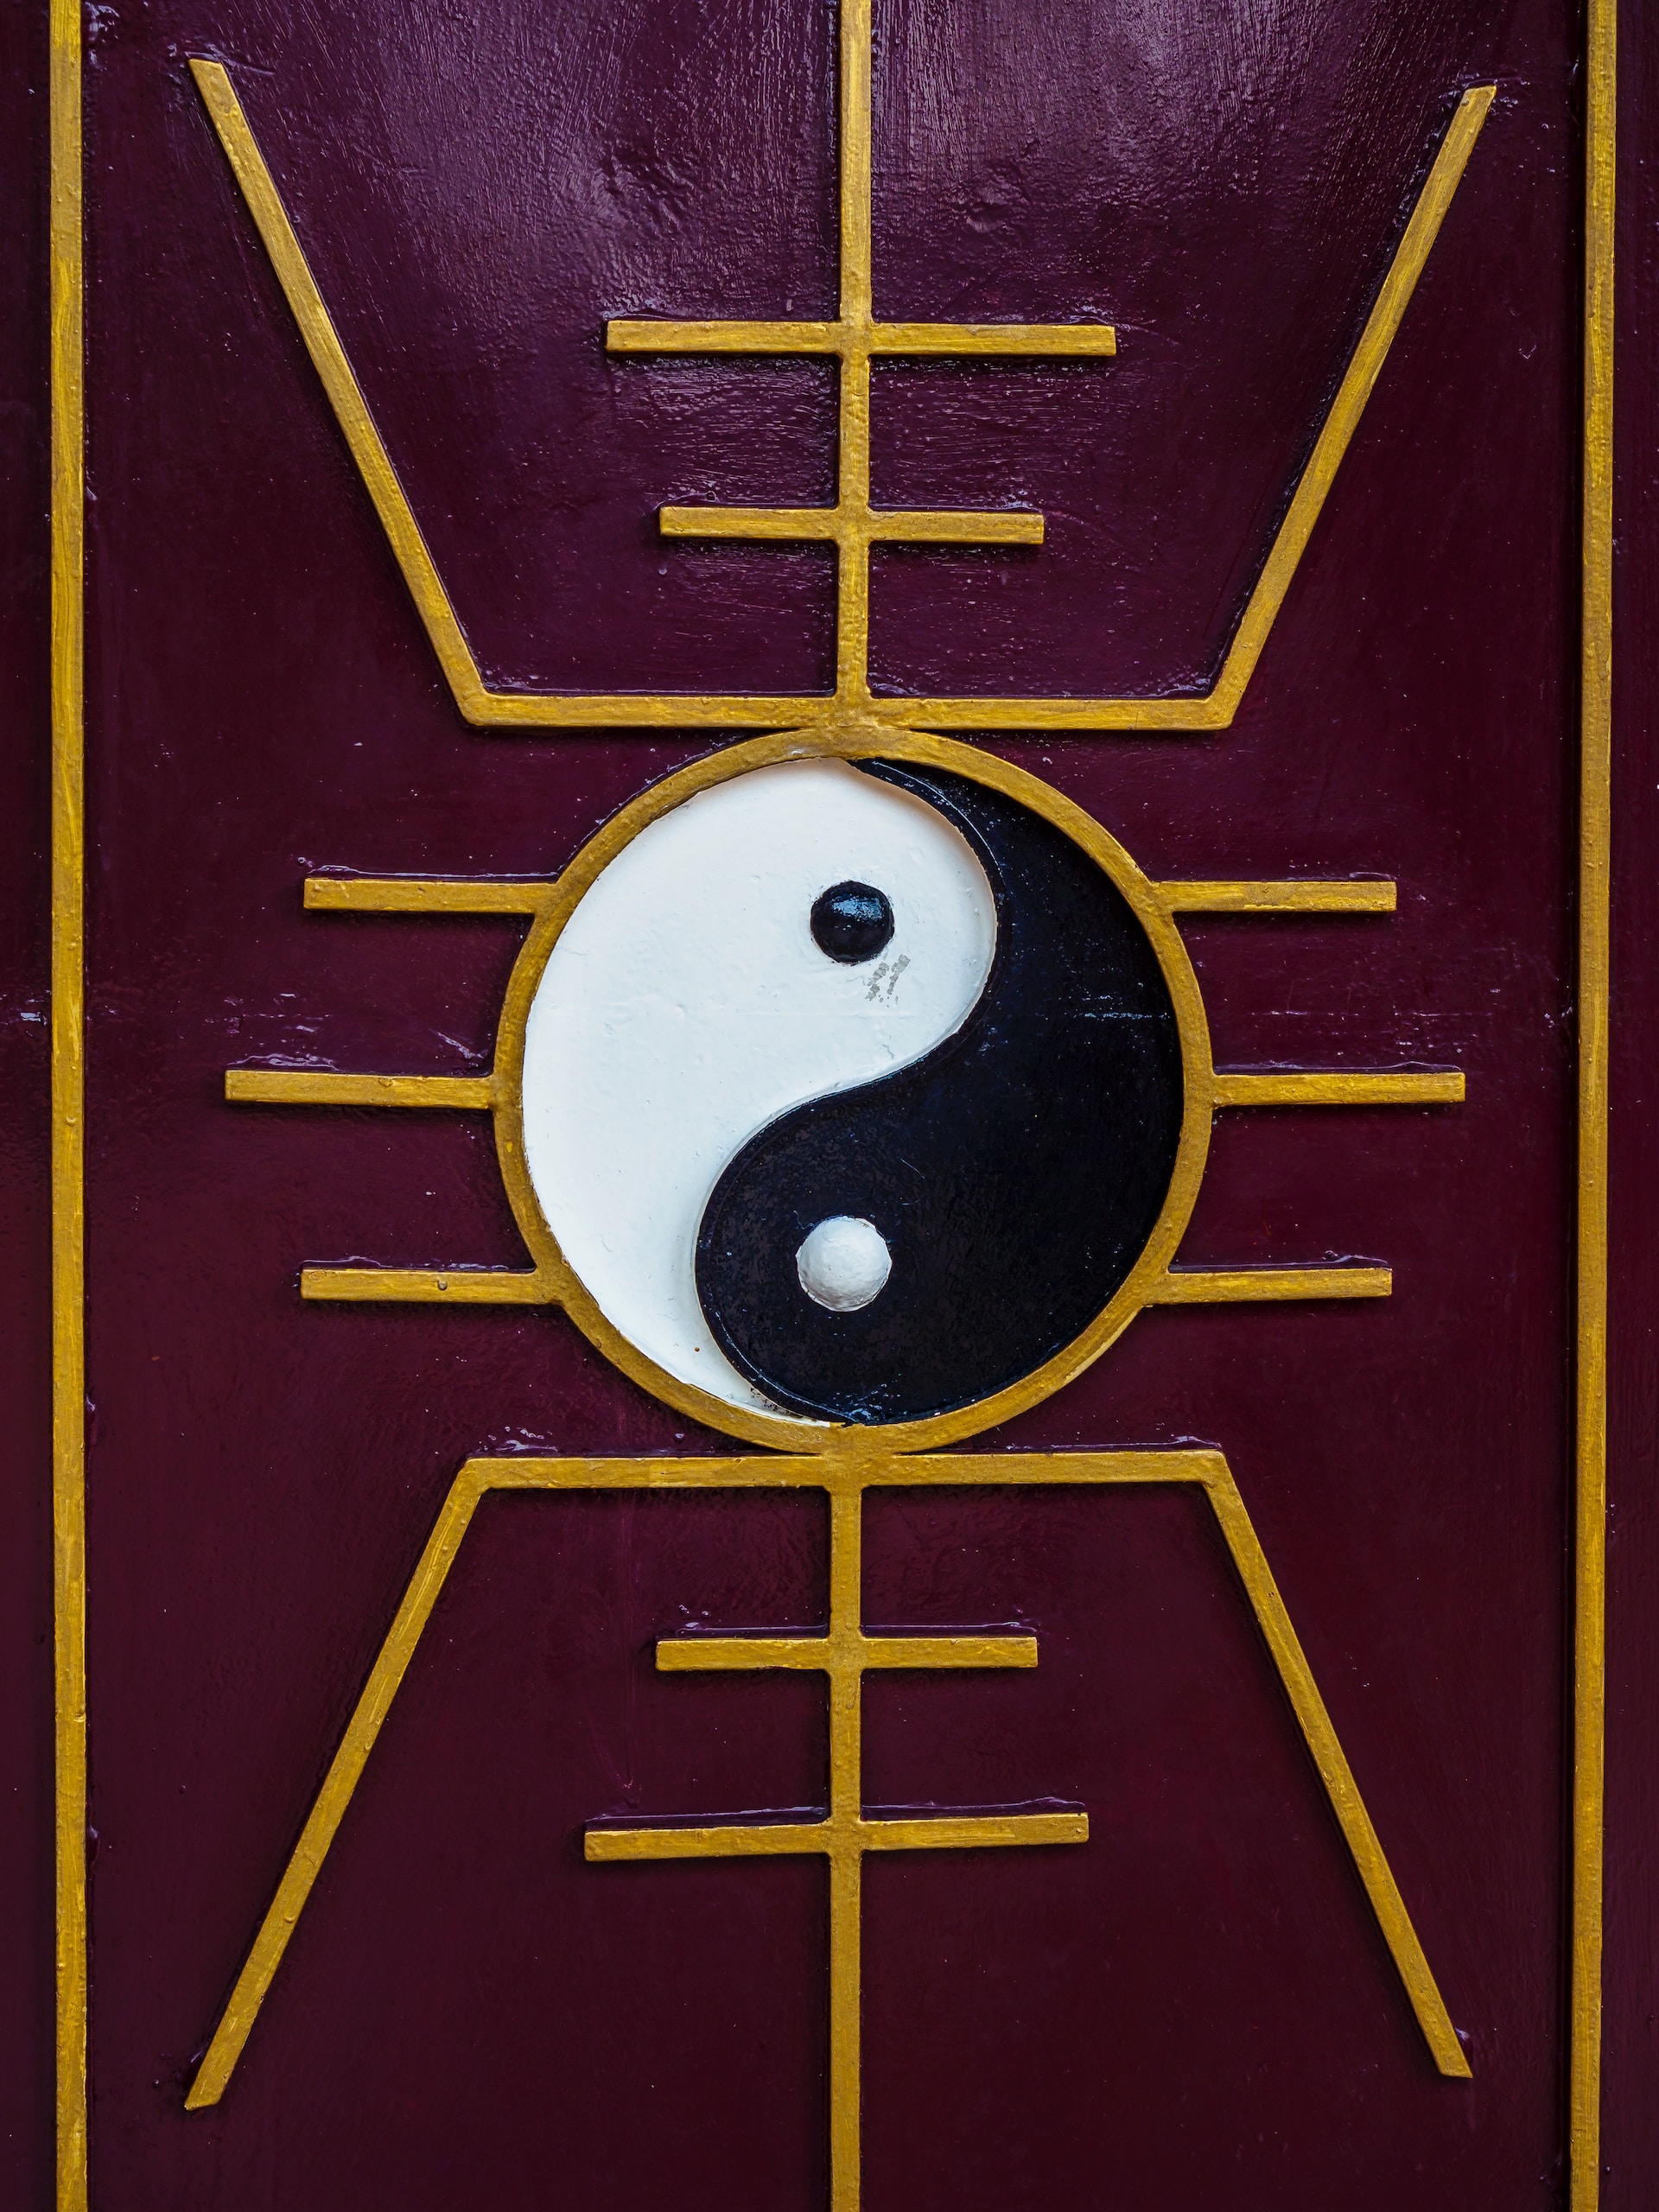 the symbol of Tao